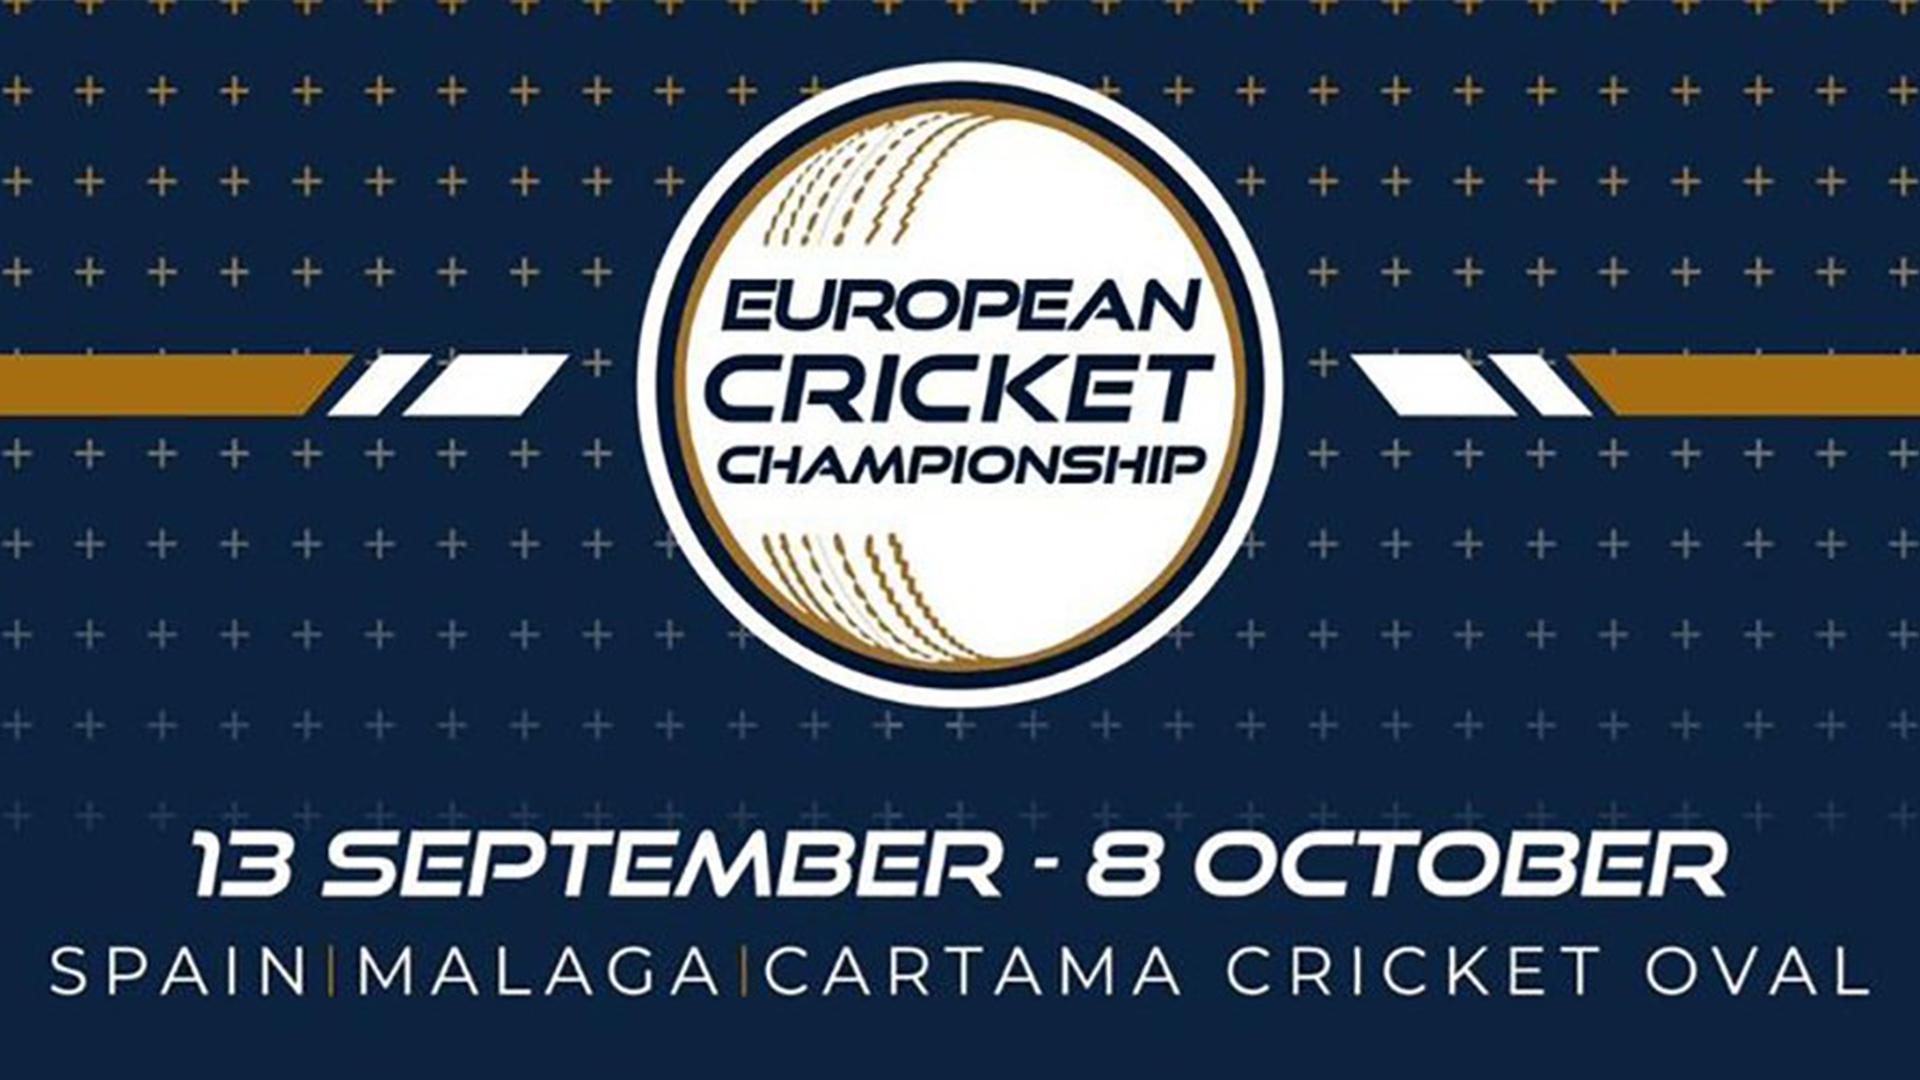 European Cricket Championship begins in Spain